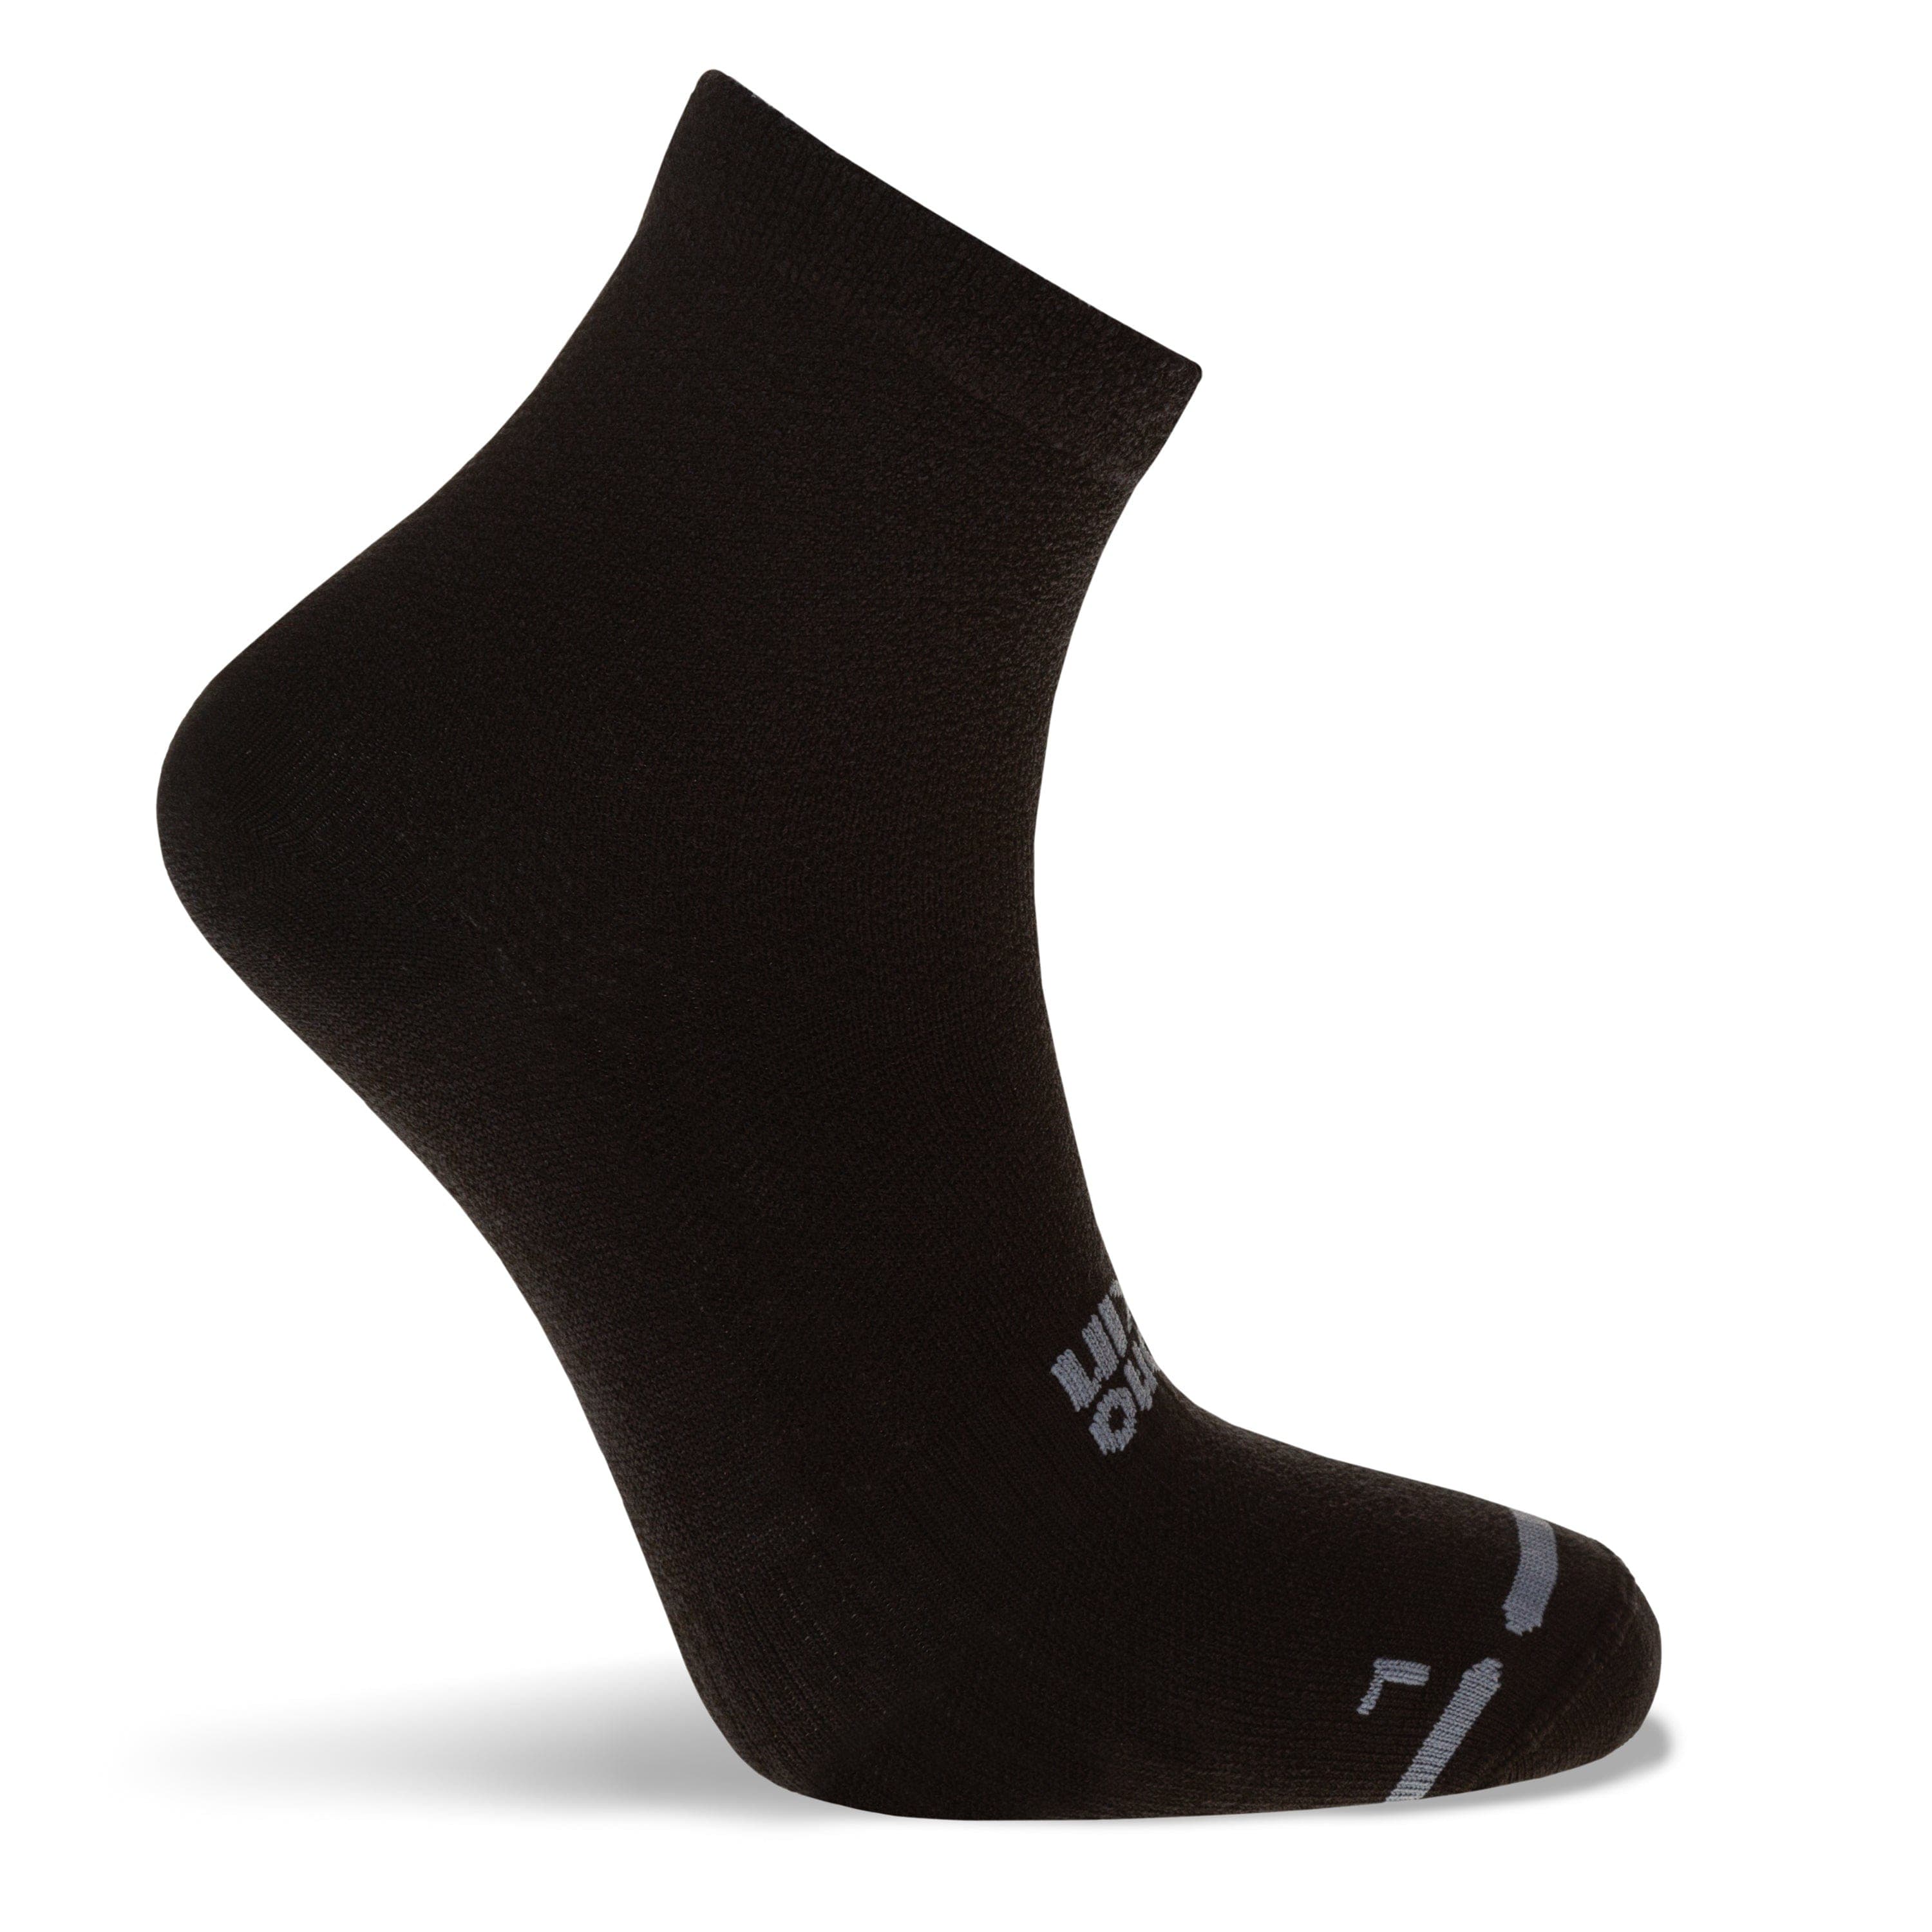 Hilly Active Anklet Zero Cushioning - Black/Grey